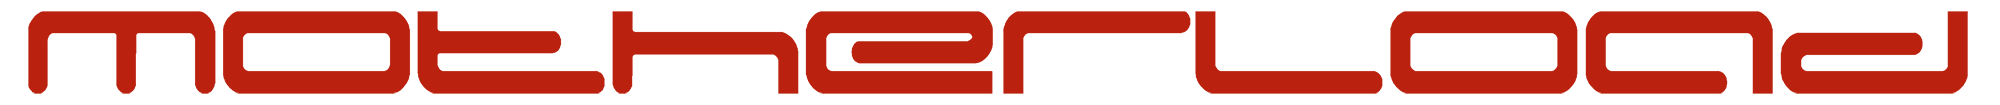 Motherload logo